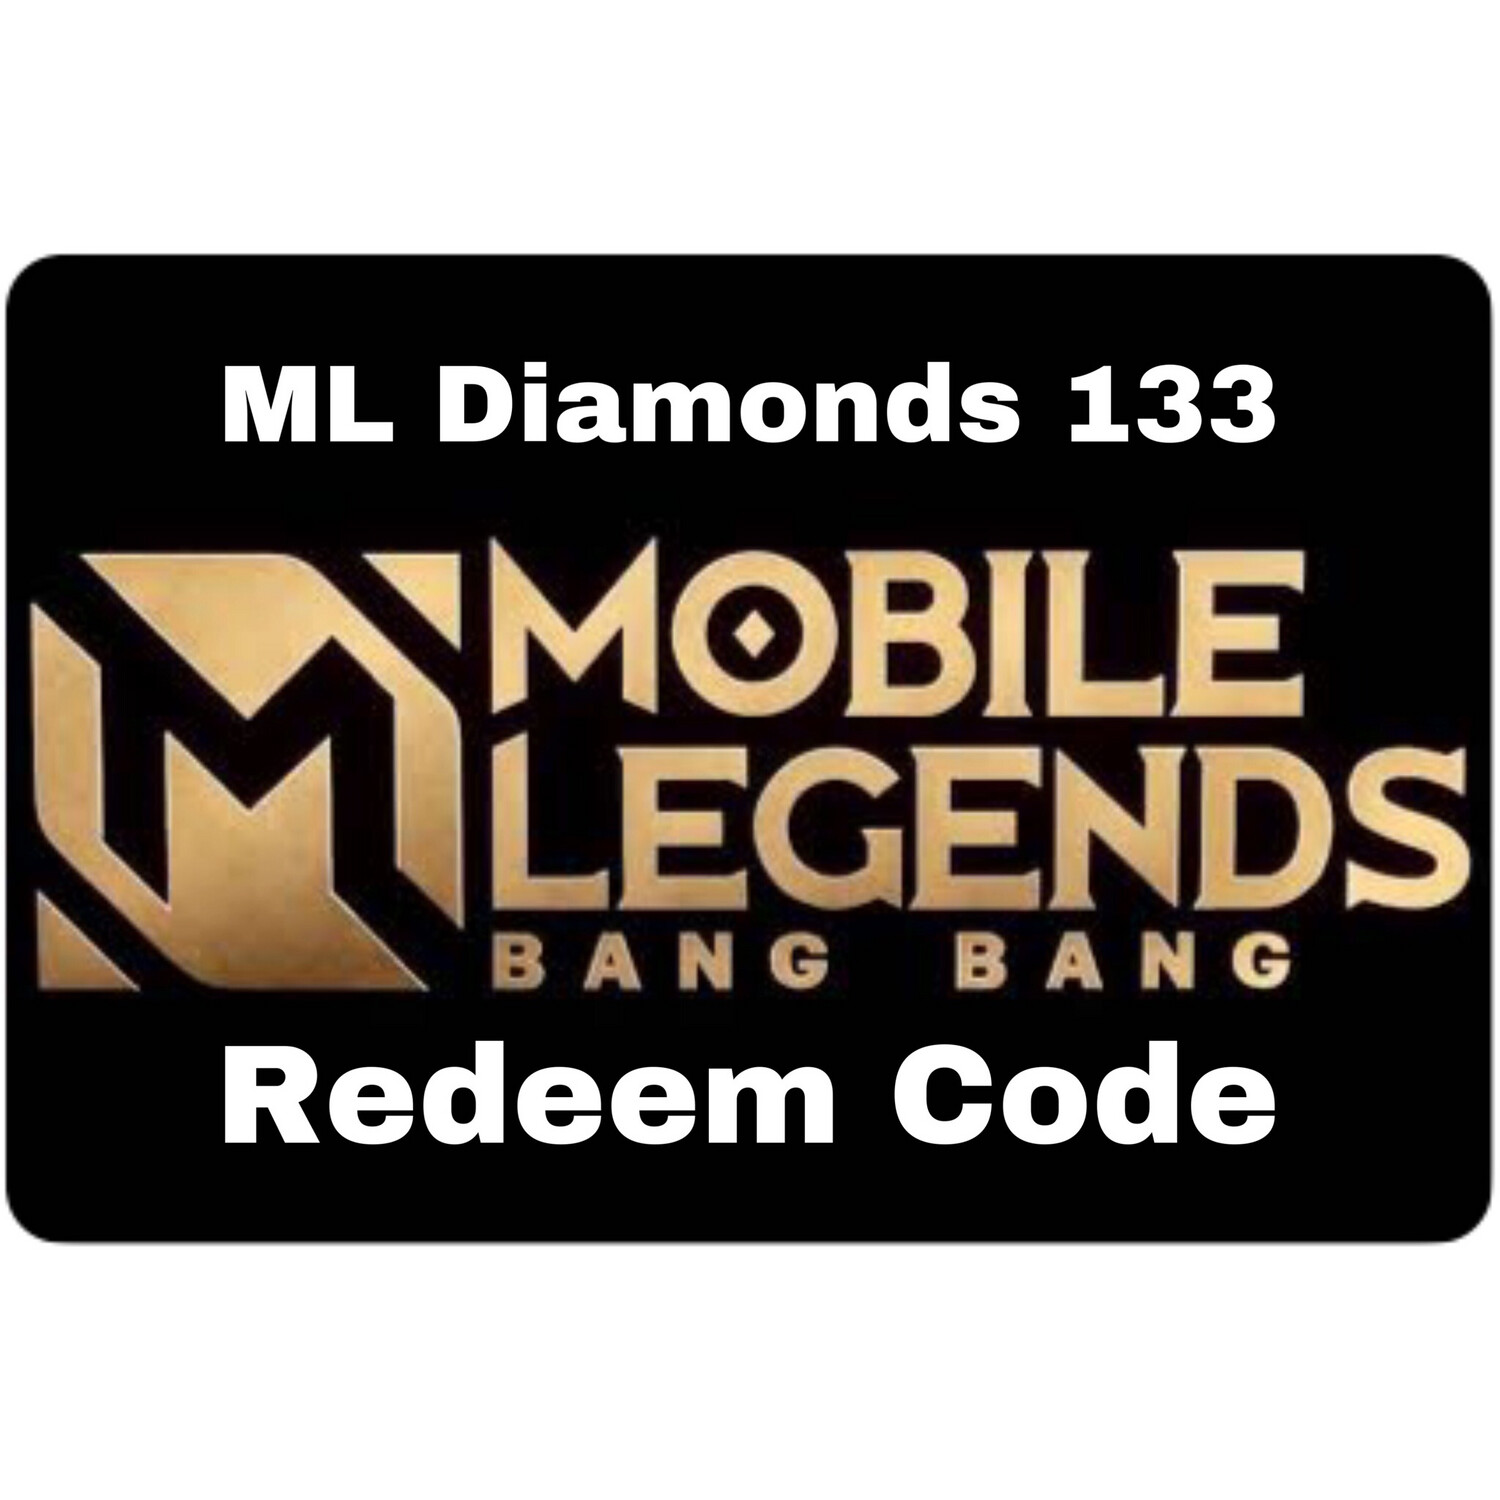 Mobile Legends 133 Diamonds Redeem Code